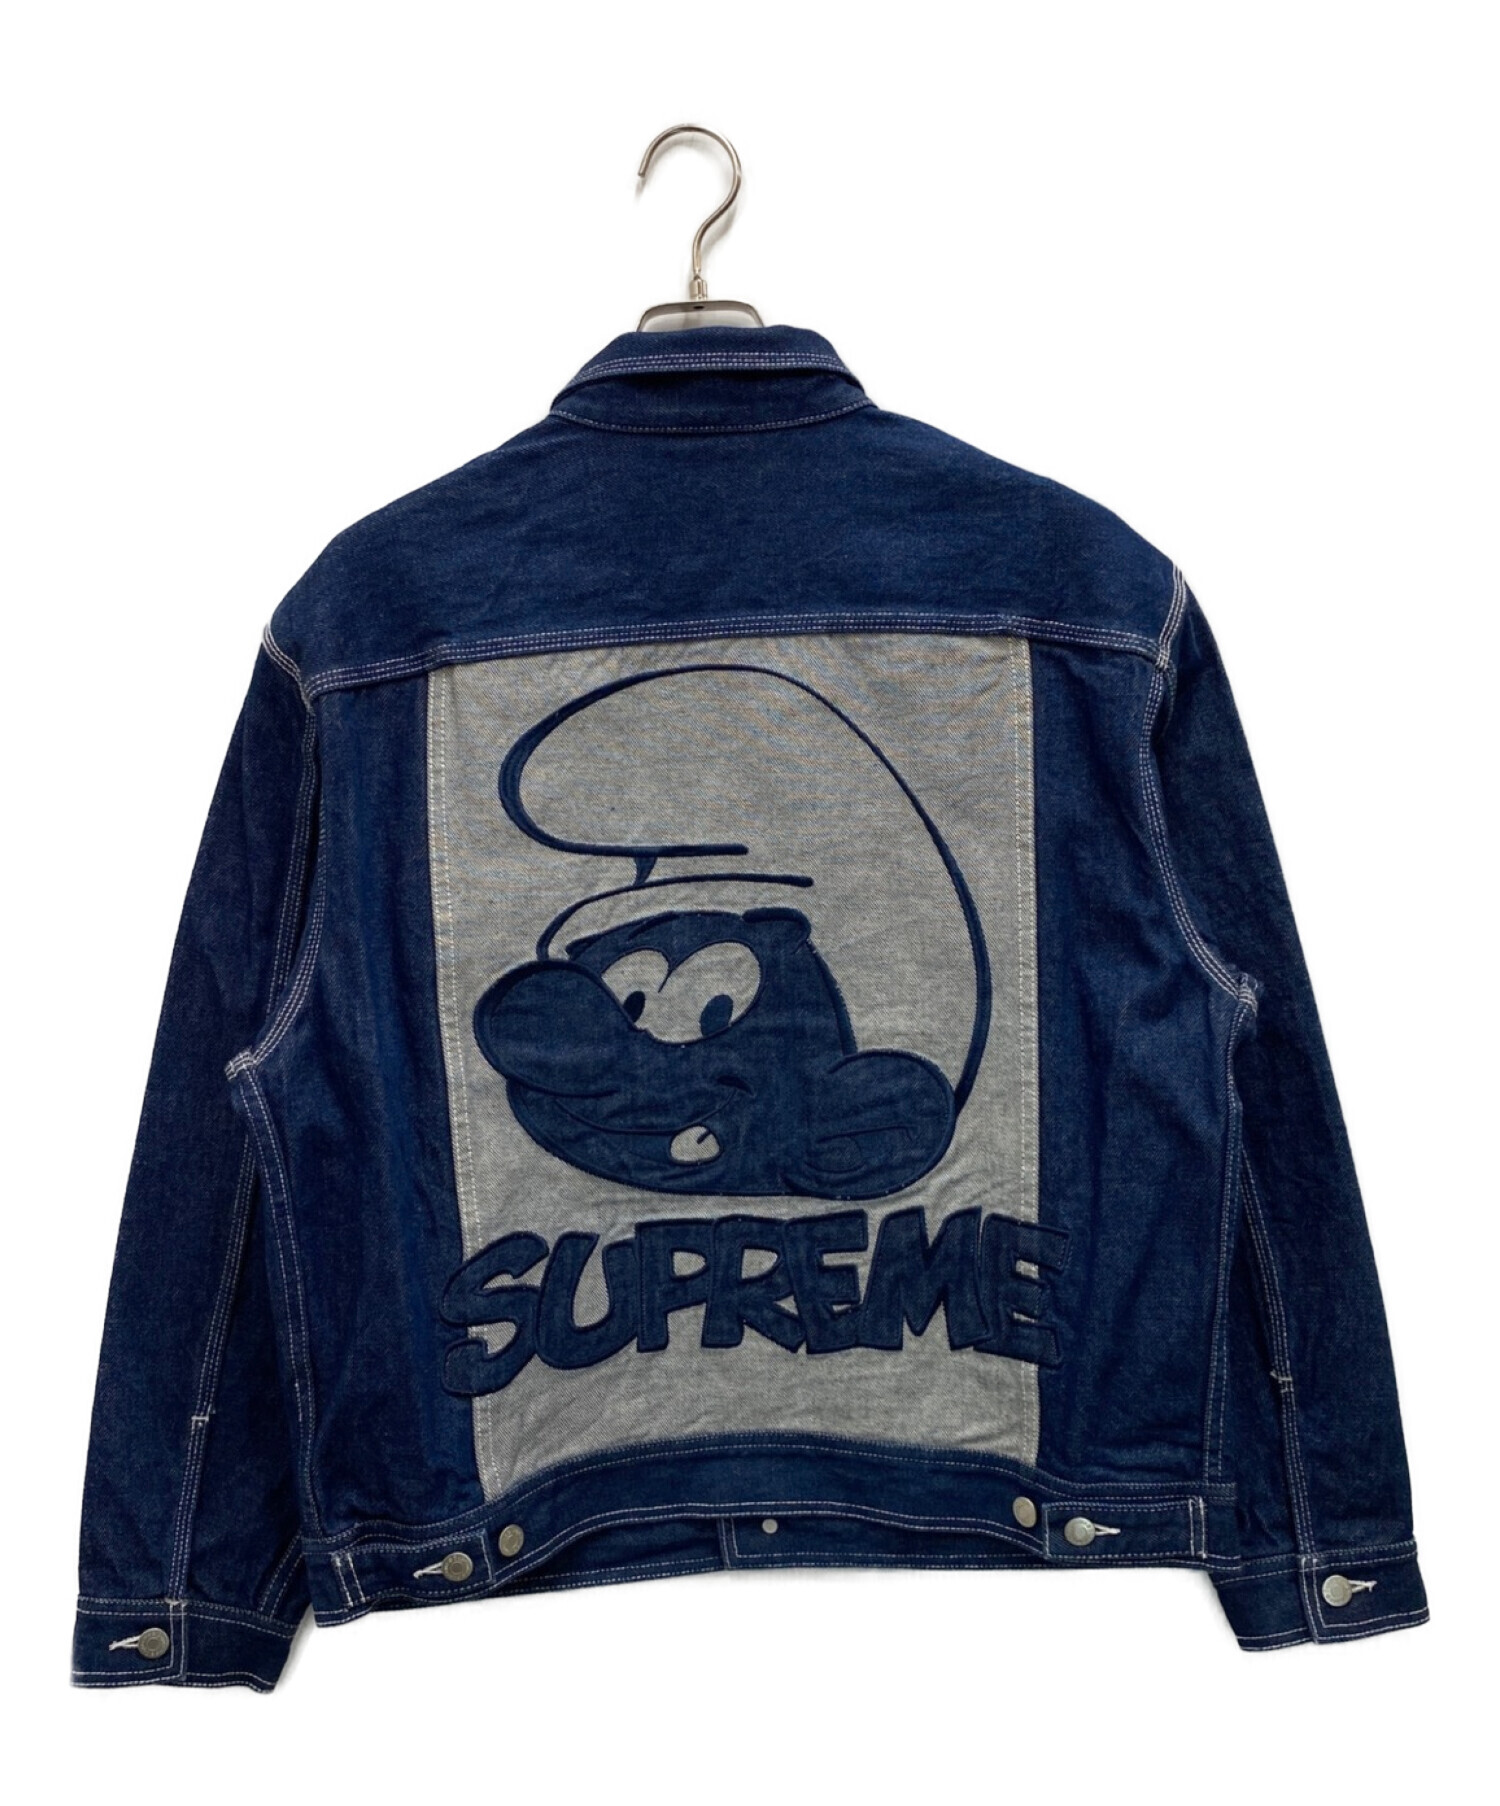 Gジャン/デニムジャケットSサイズ supreme Smurfs Denim Trucker Jacket